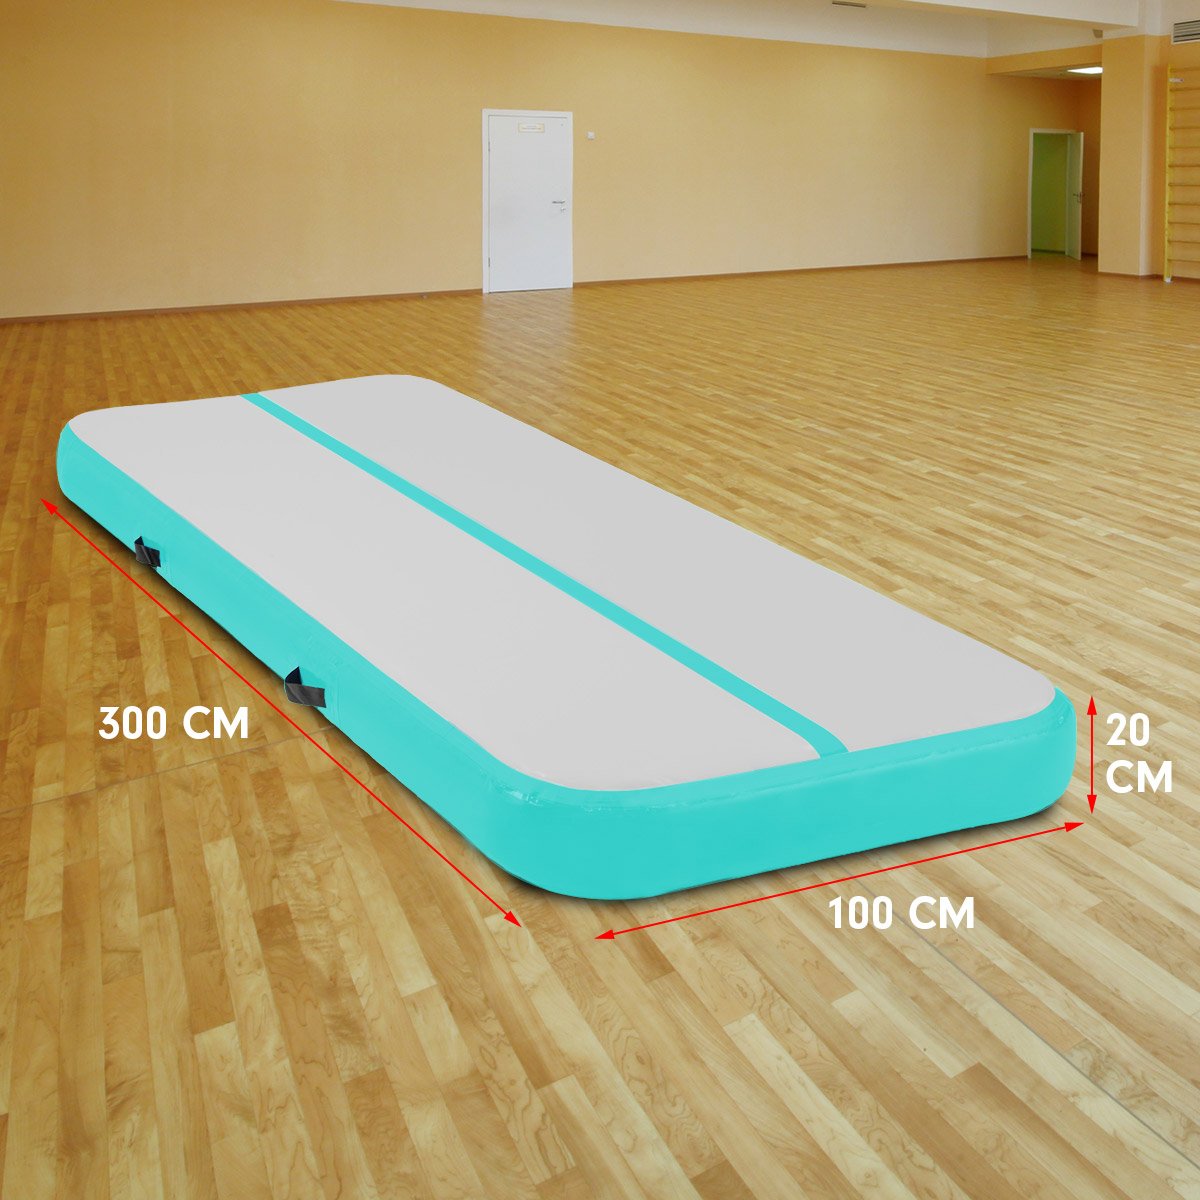 3m x 1m Air Track Inflatable Gymnastics Tumbling Mat - Green